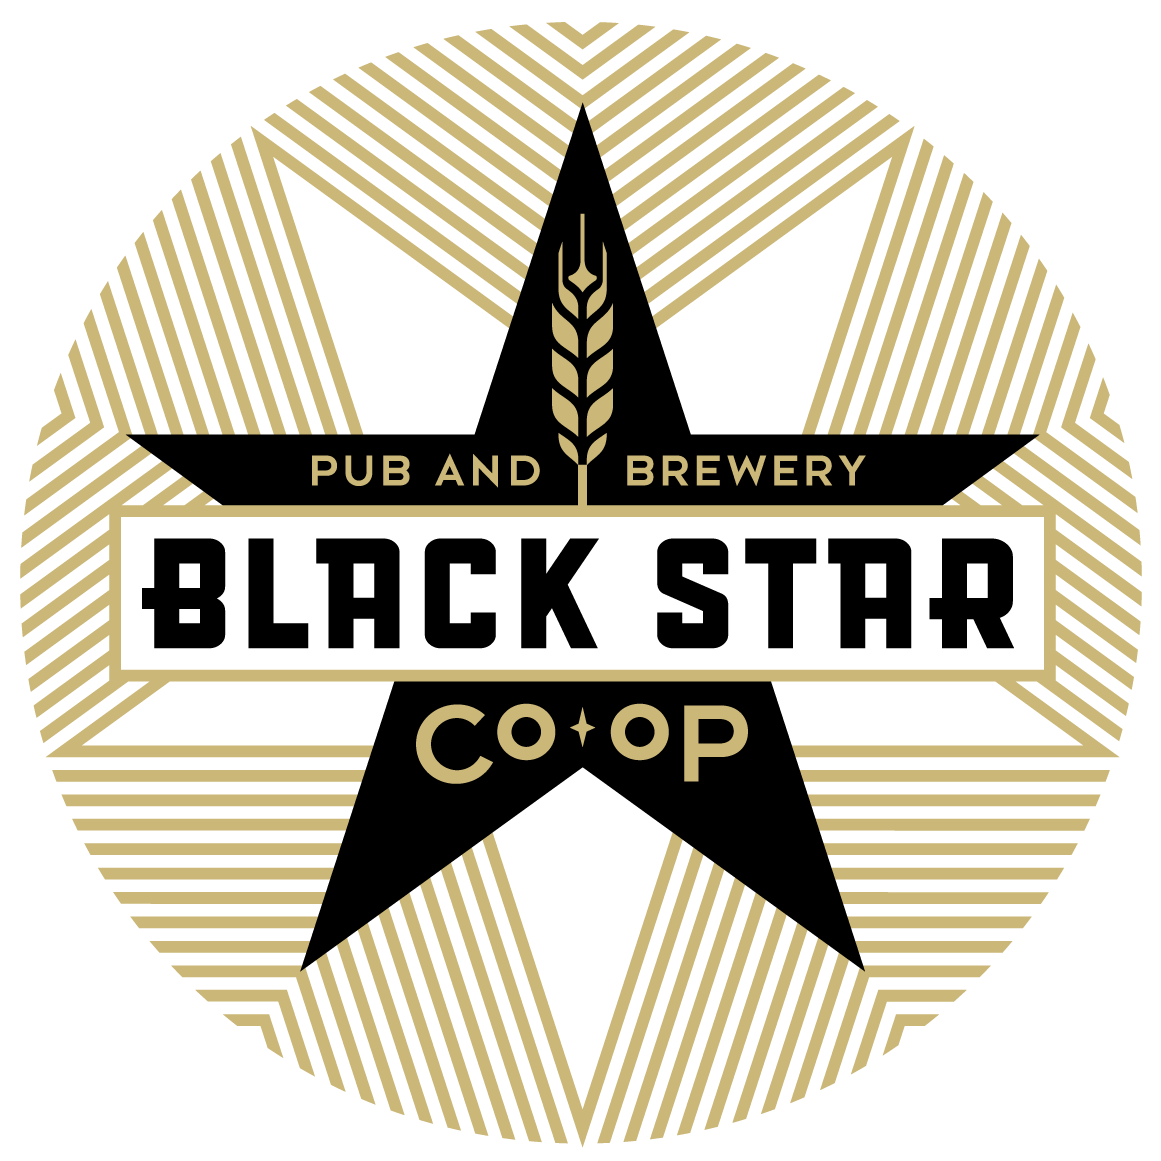 Black Star in Circle Company Logo - Black Star Co Op